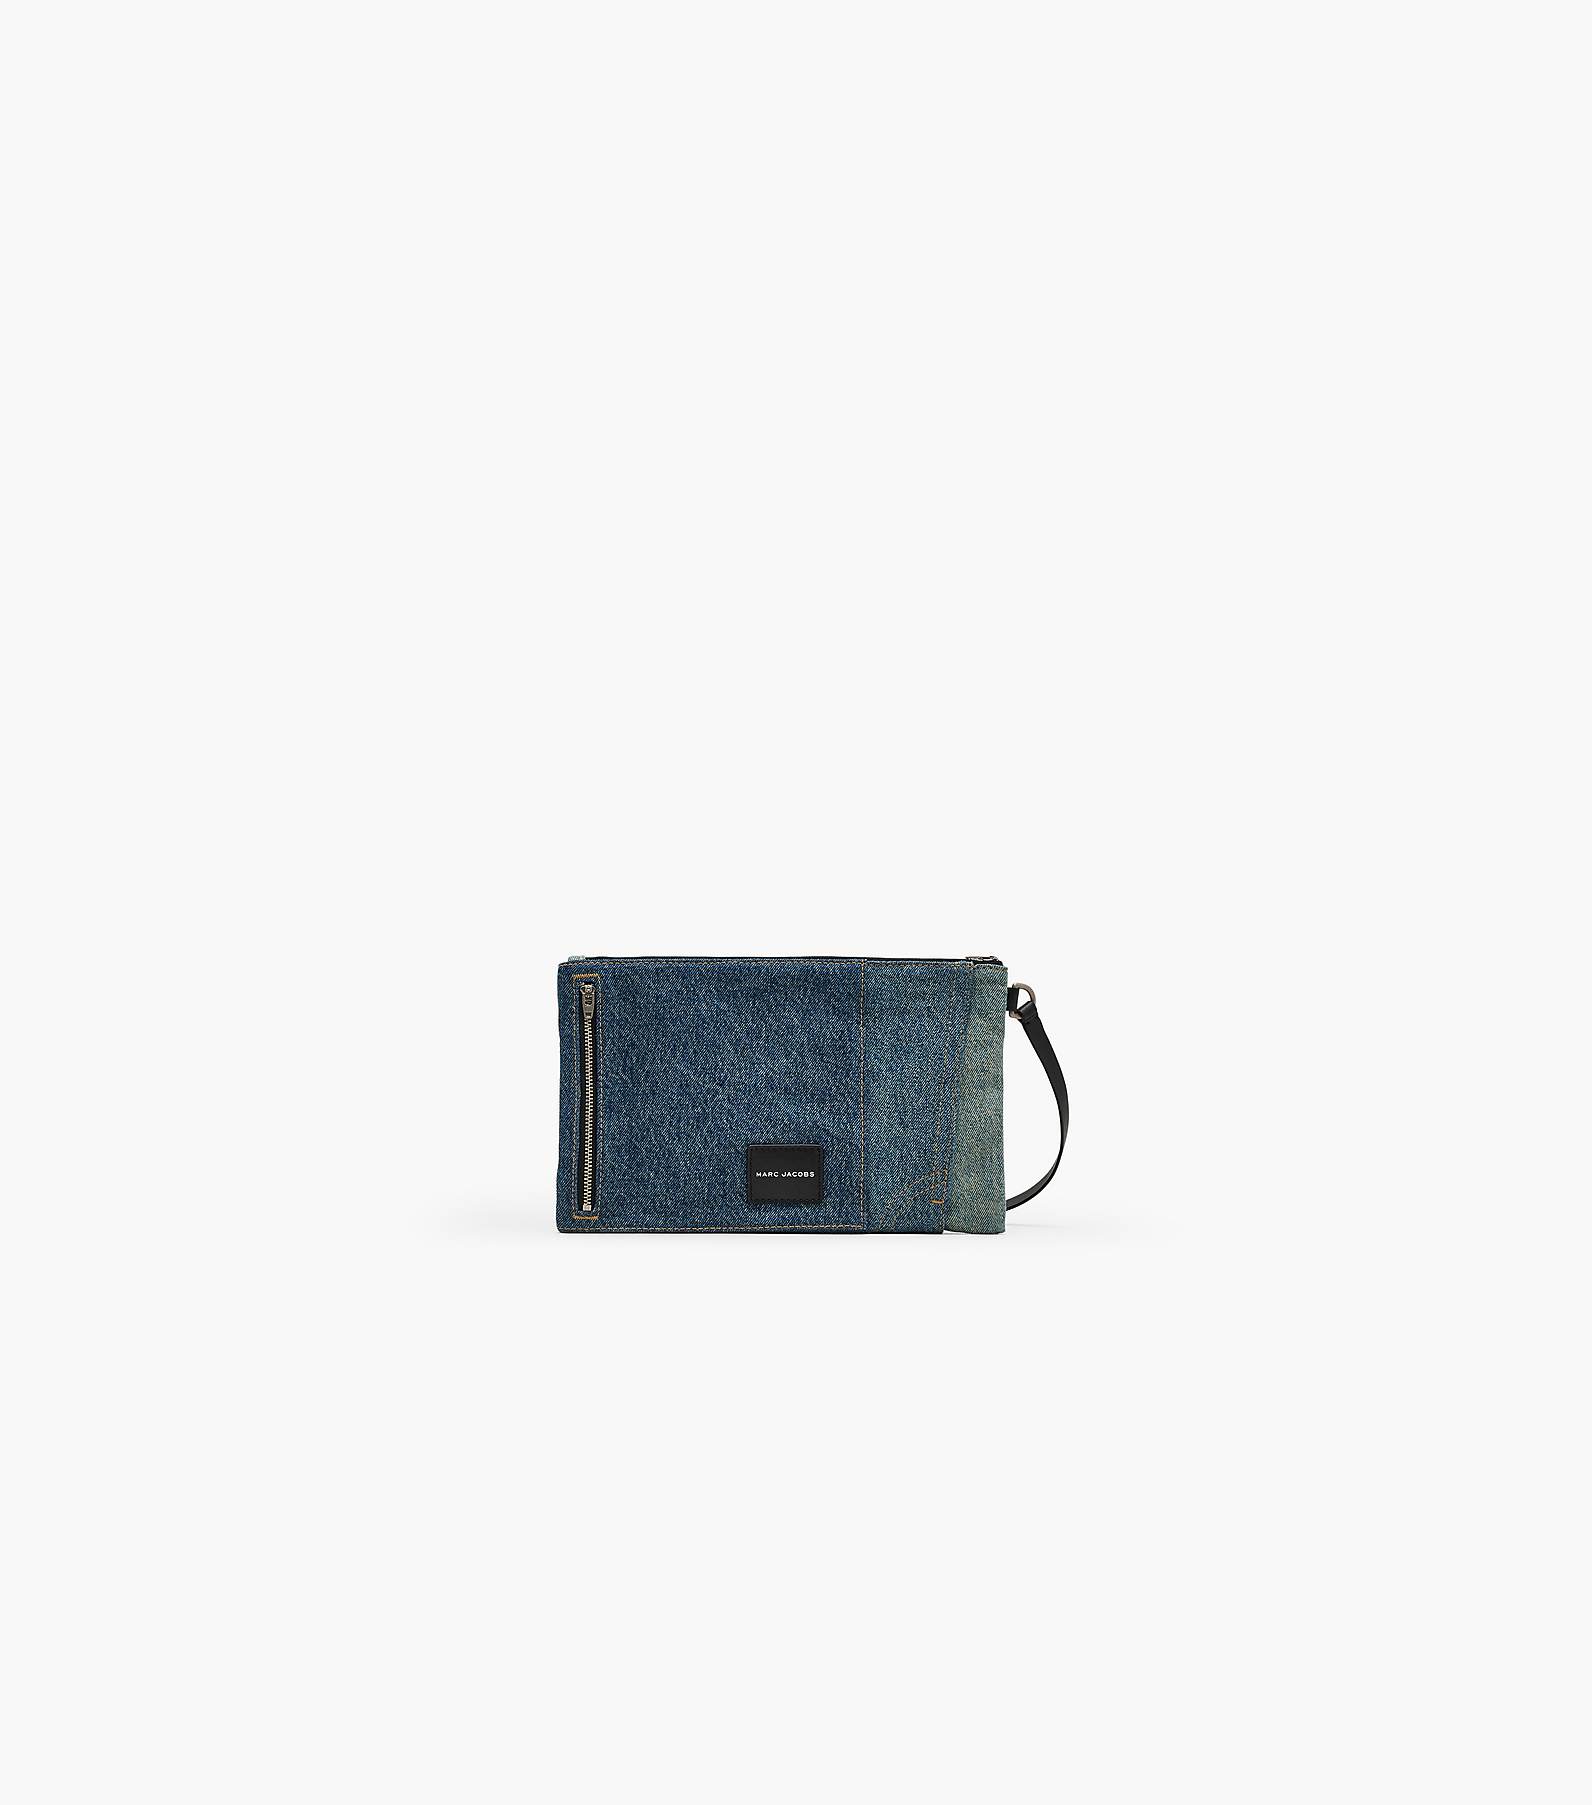 The Deconstructed Denim Sack Bag | Marc Jacobs | Official Site